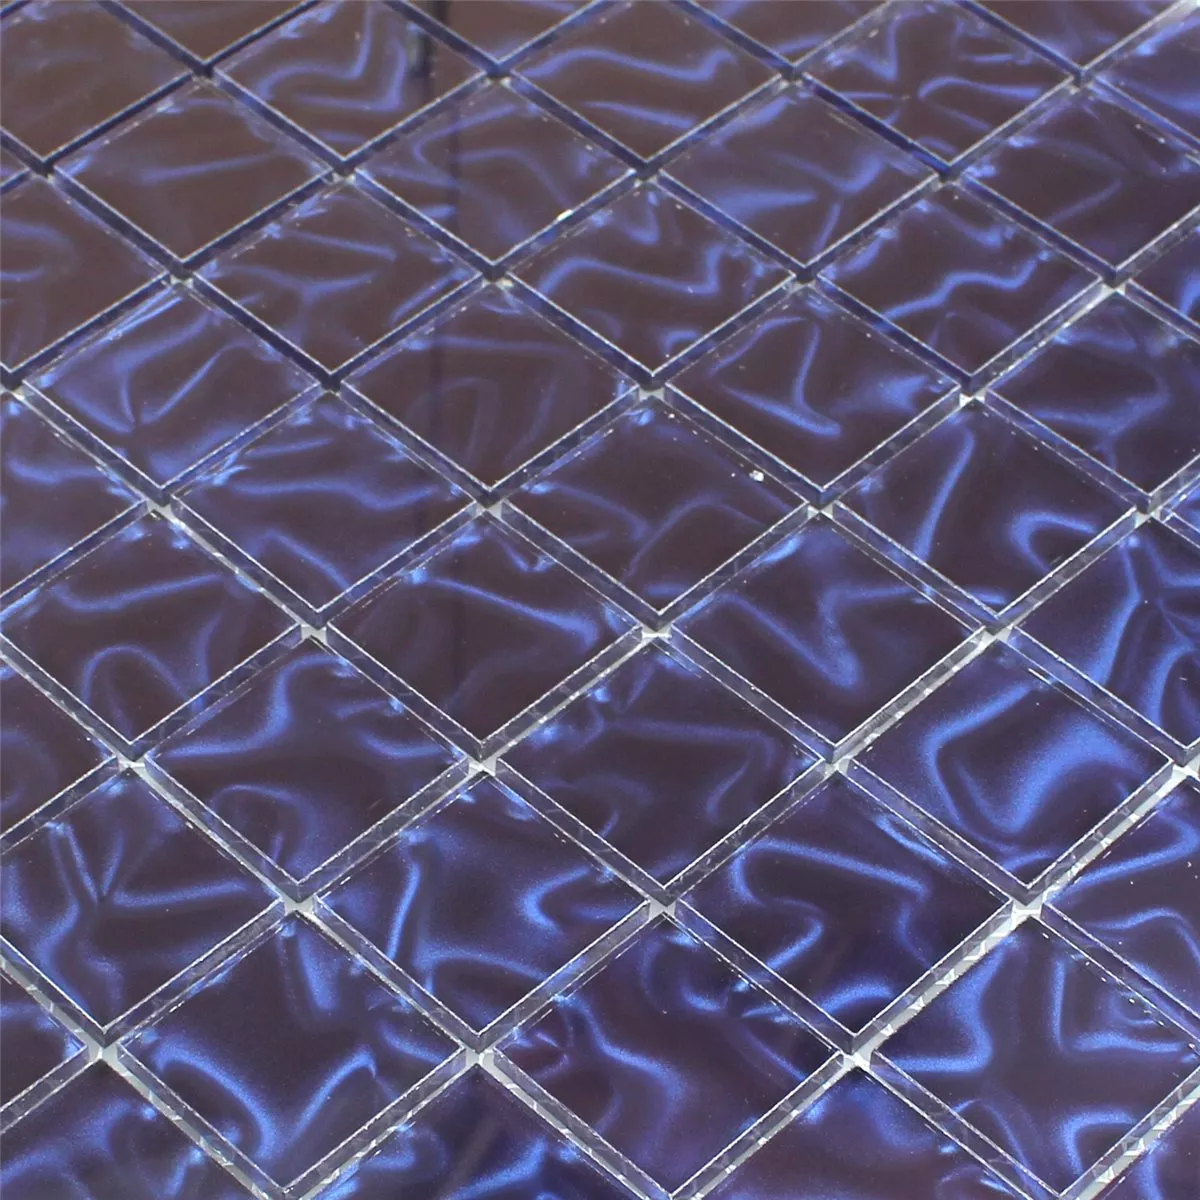 Sample Mosaic Tiles Glass Calypso Blue